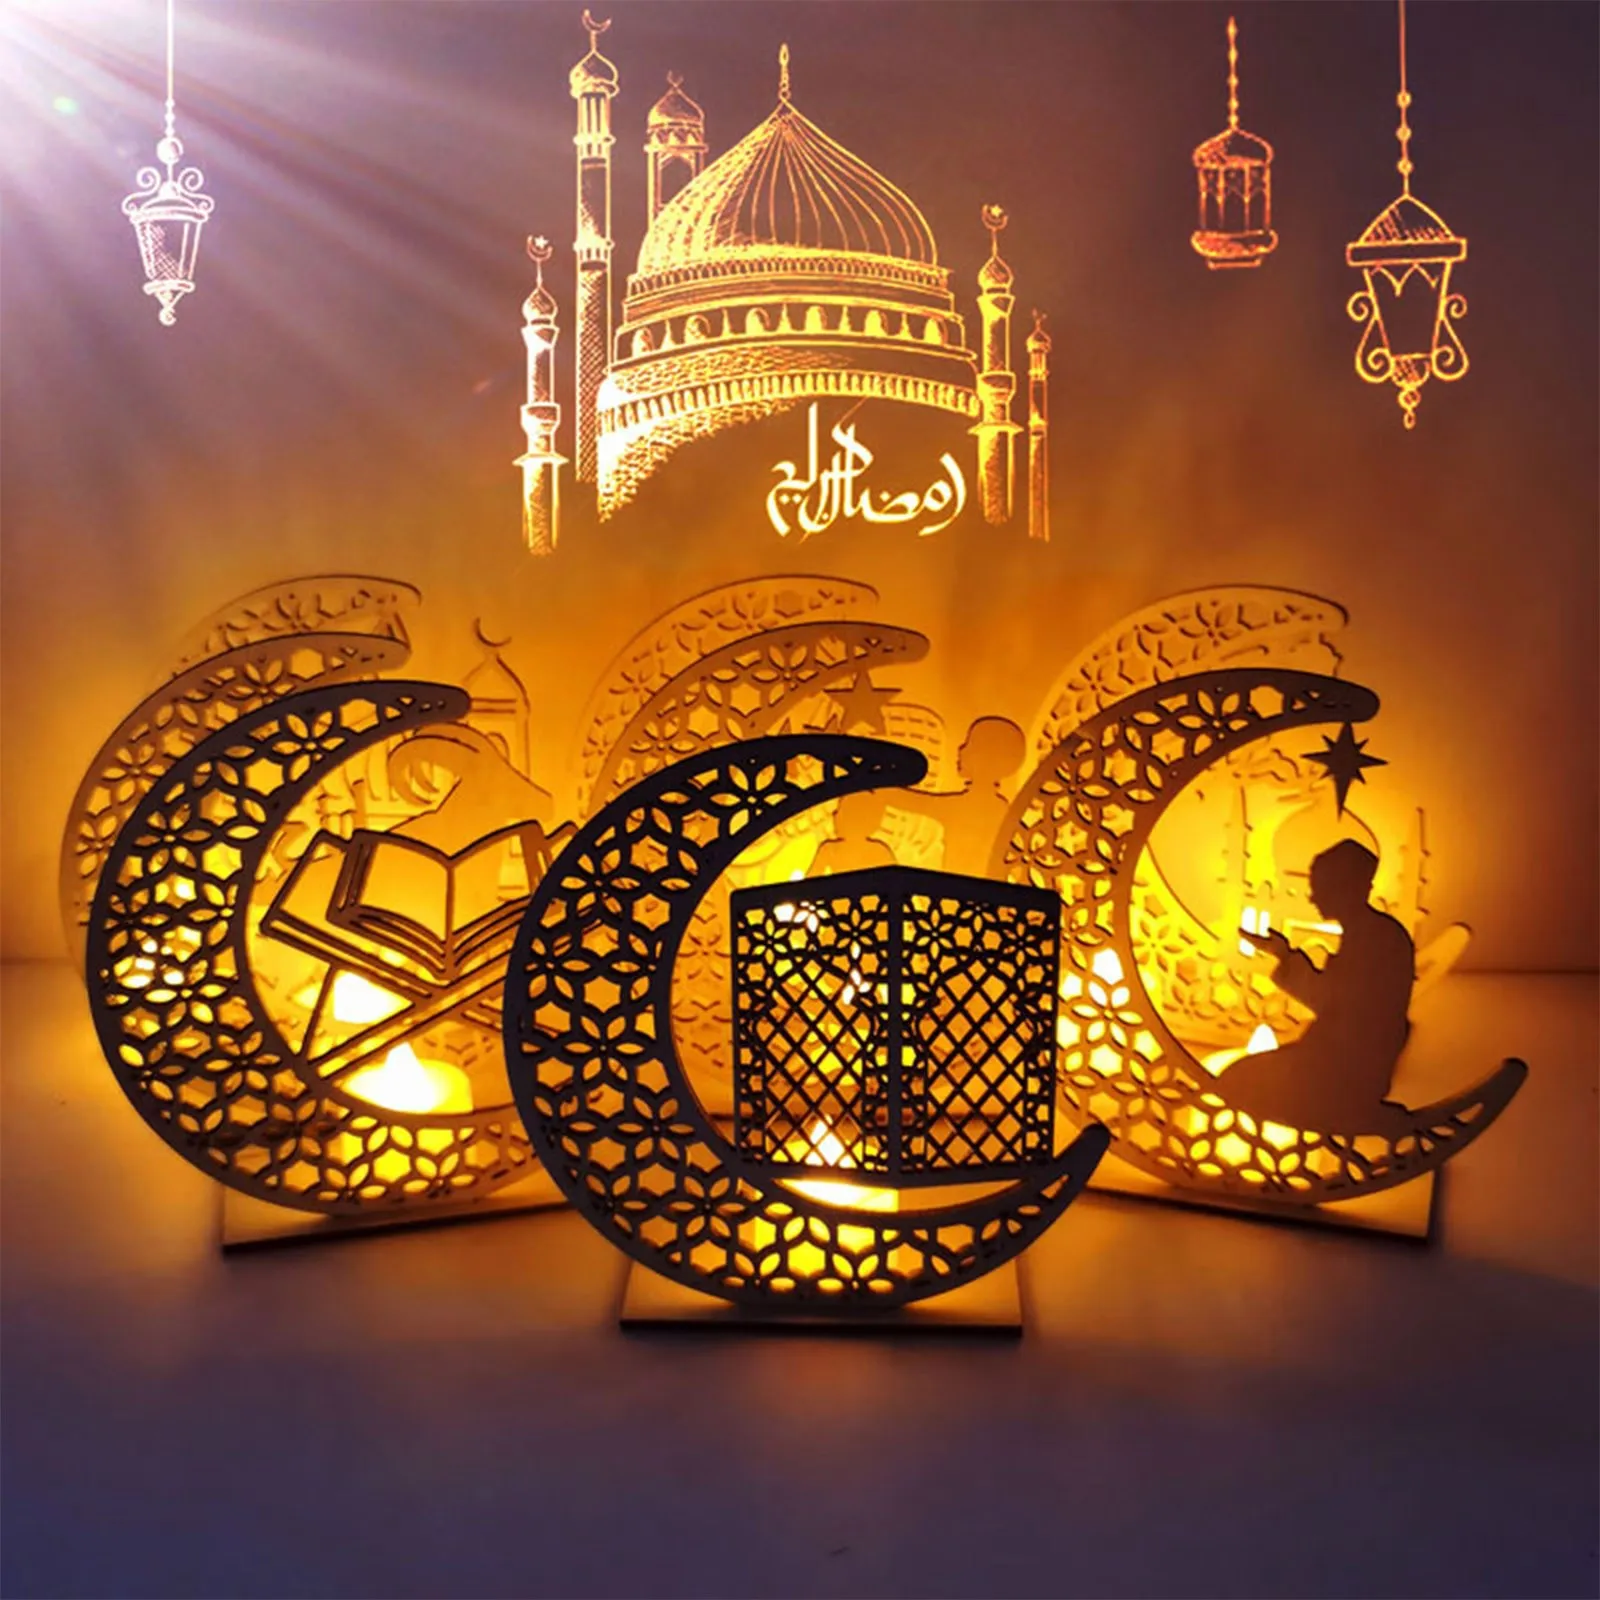 

Party Supplies 2021 Muslim Ledeid Mubarak Wooden Gifts Can Be Diy Decoration For Eid Al Fitr Ramadan Decoration Islamic Pendant